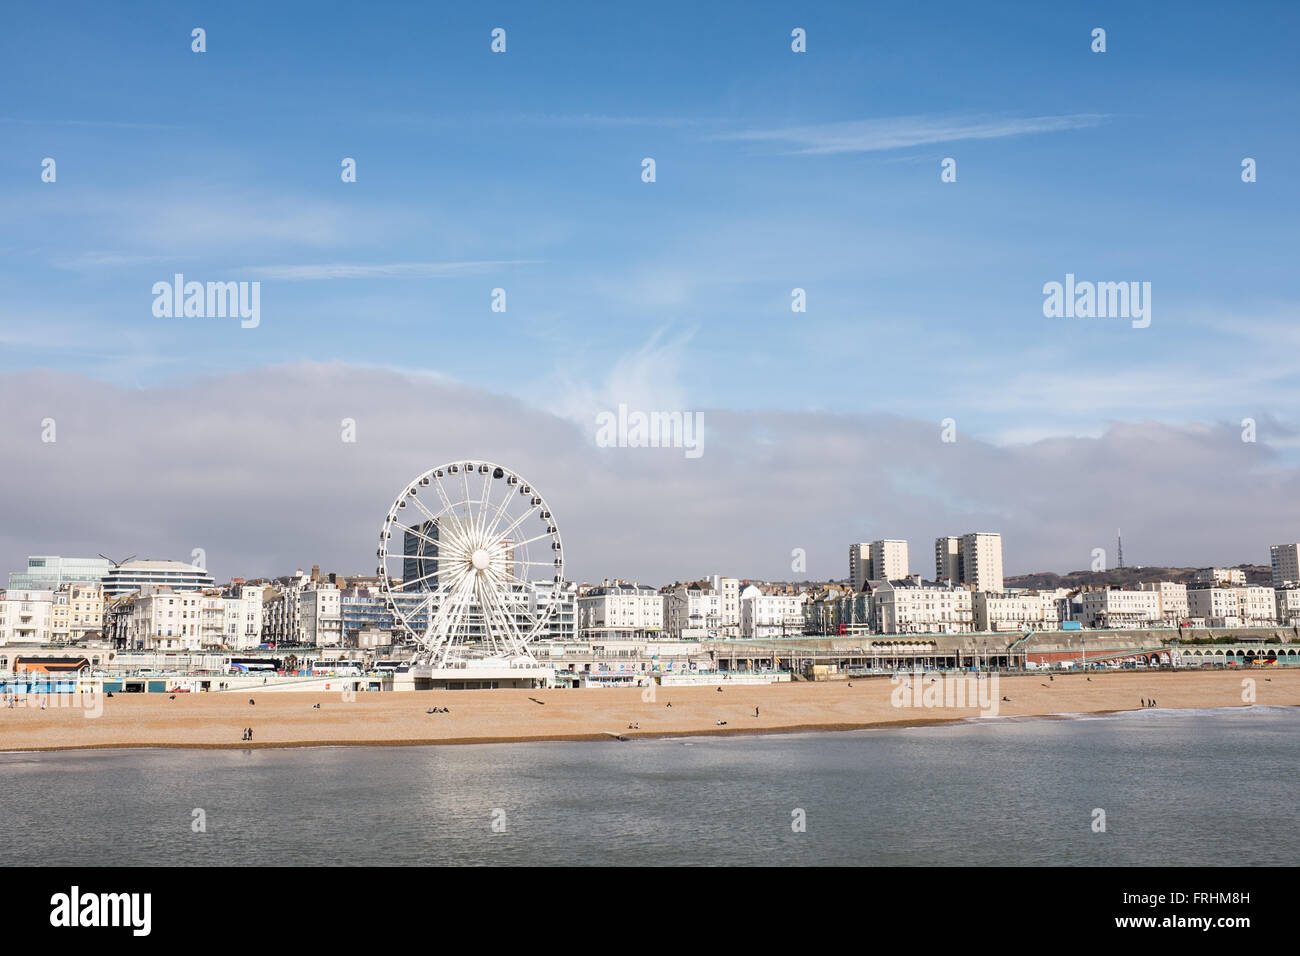 The Beach, Seafront, Brighton, UK Stock Photo